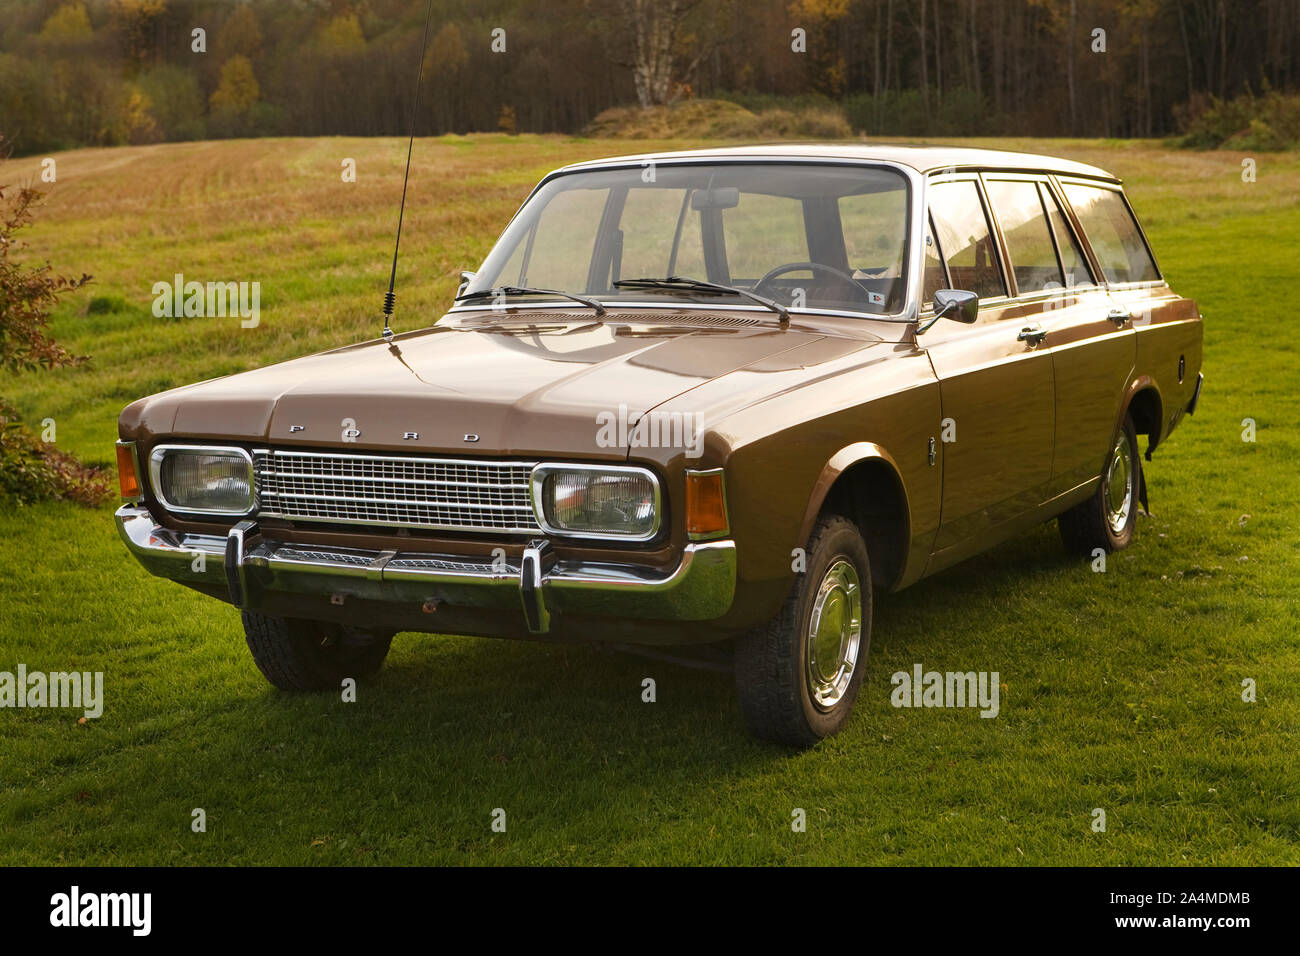 1970 Ford Taunus 17M (Kombi Stockfotografie - Alamy